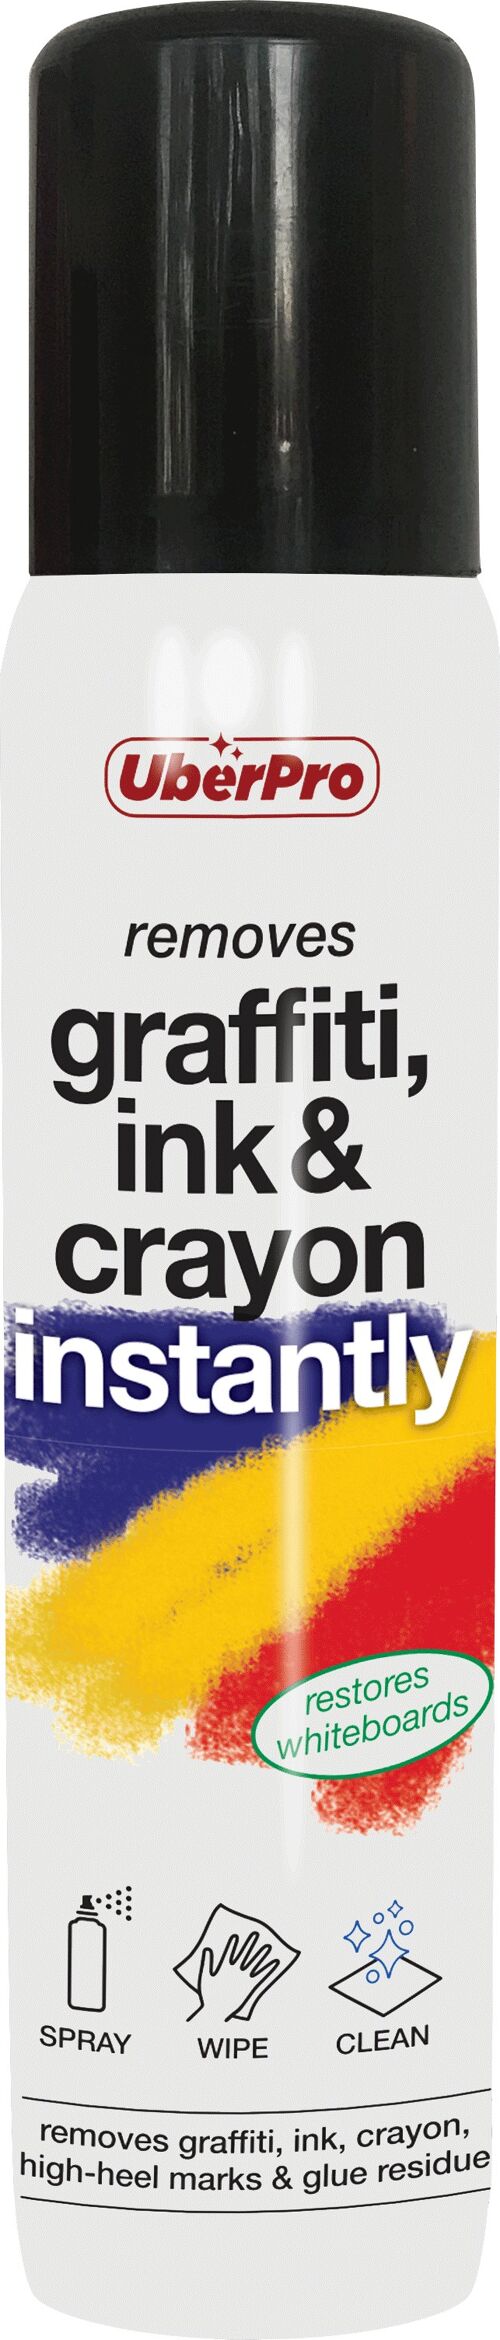 Graffiti, ink & crayon remover 1200 units